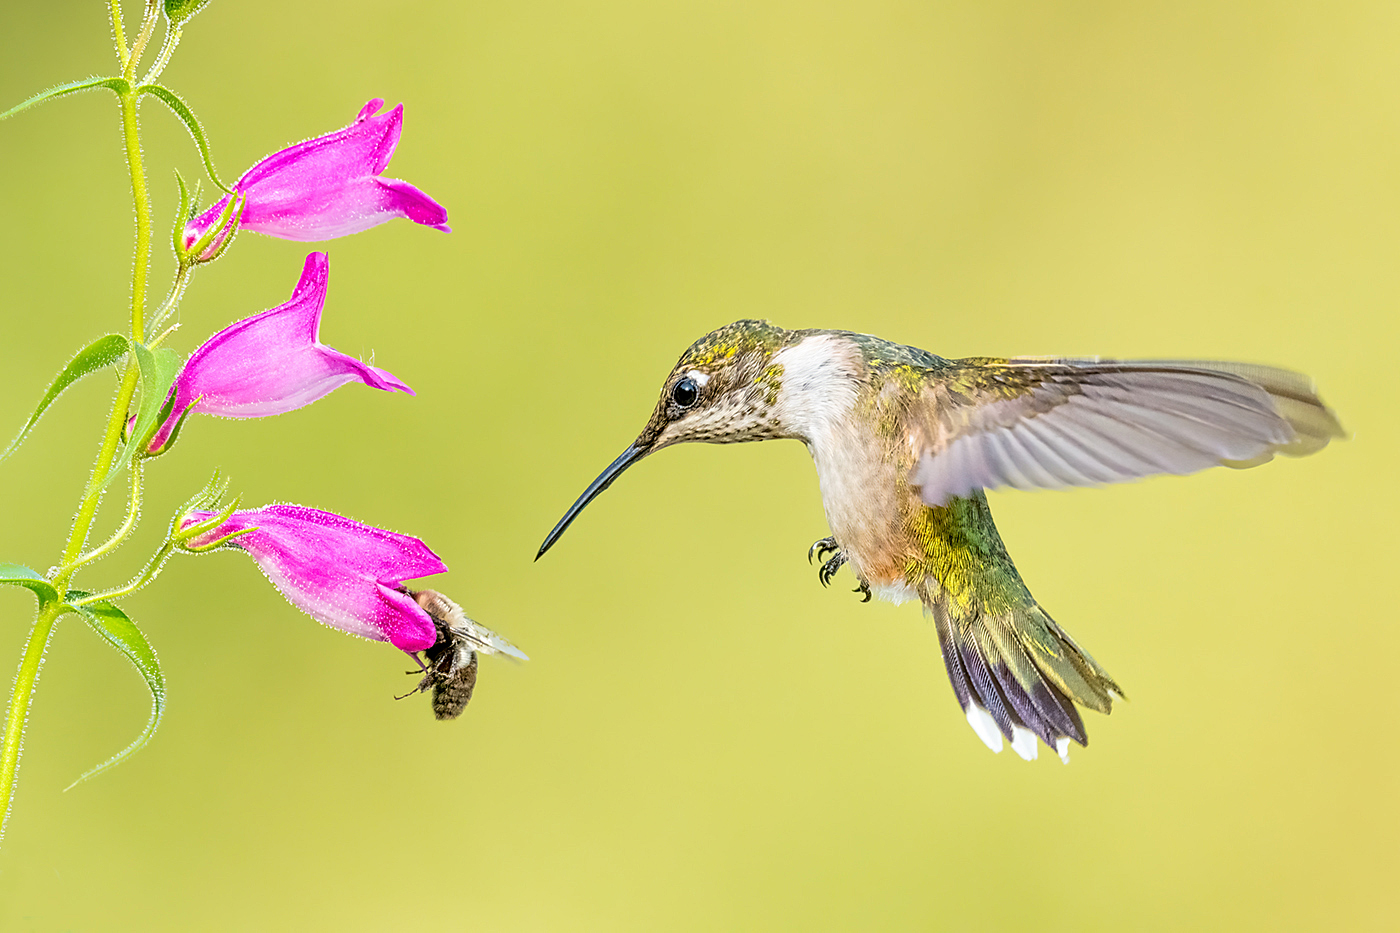 Hummingbird and Bee by Kathrin Swoboda